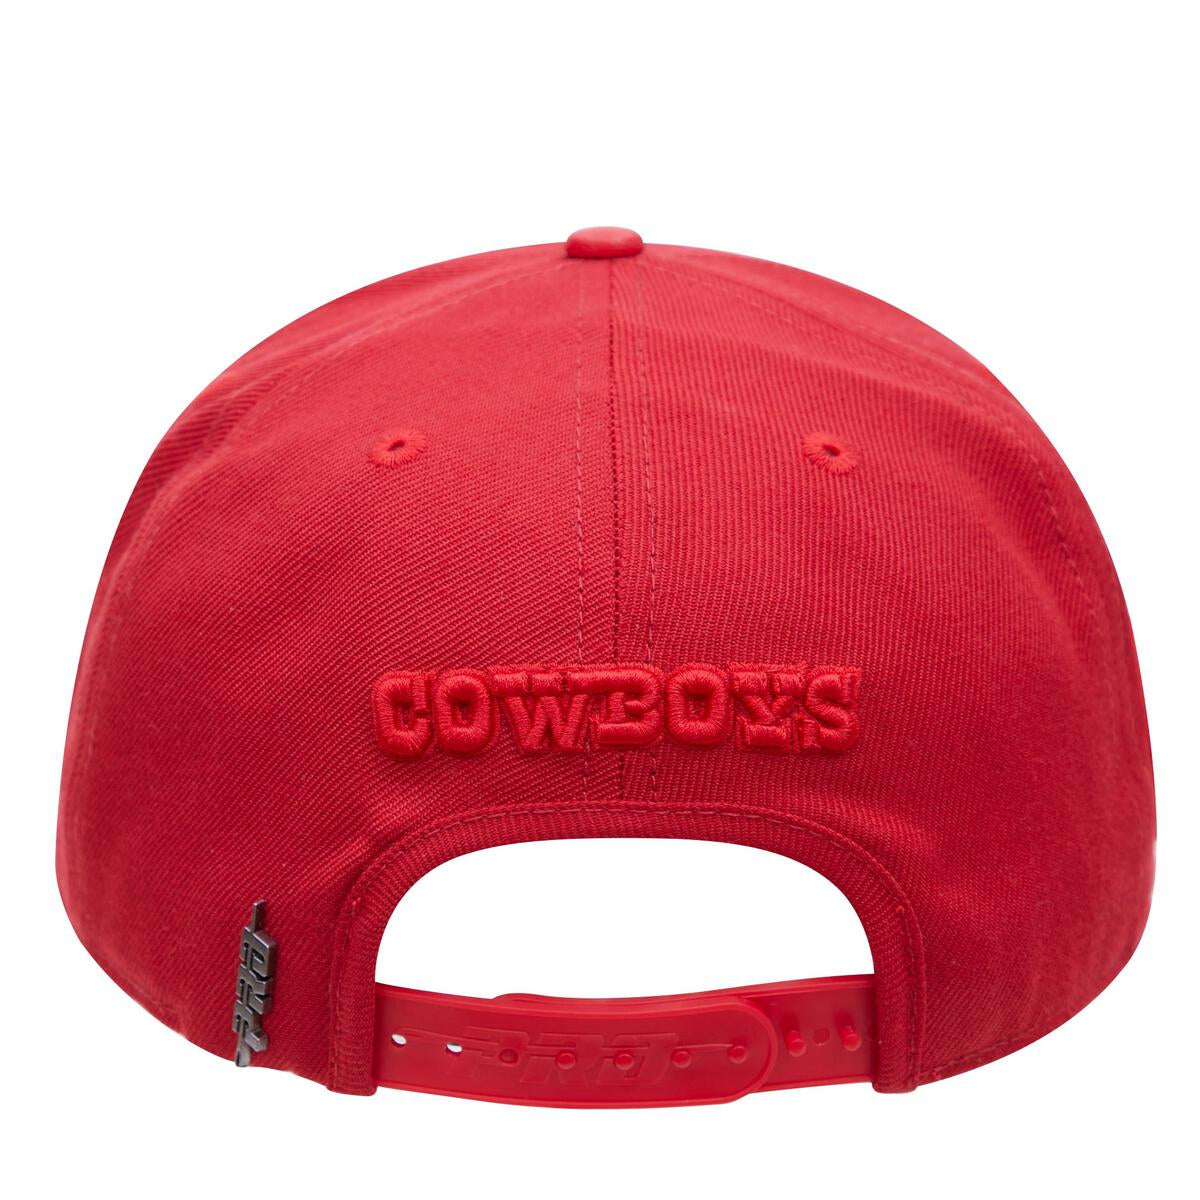 Pro Standard Dallas Cowboys Stacked Logo Snapback Hat